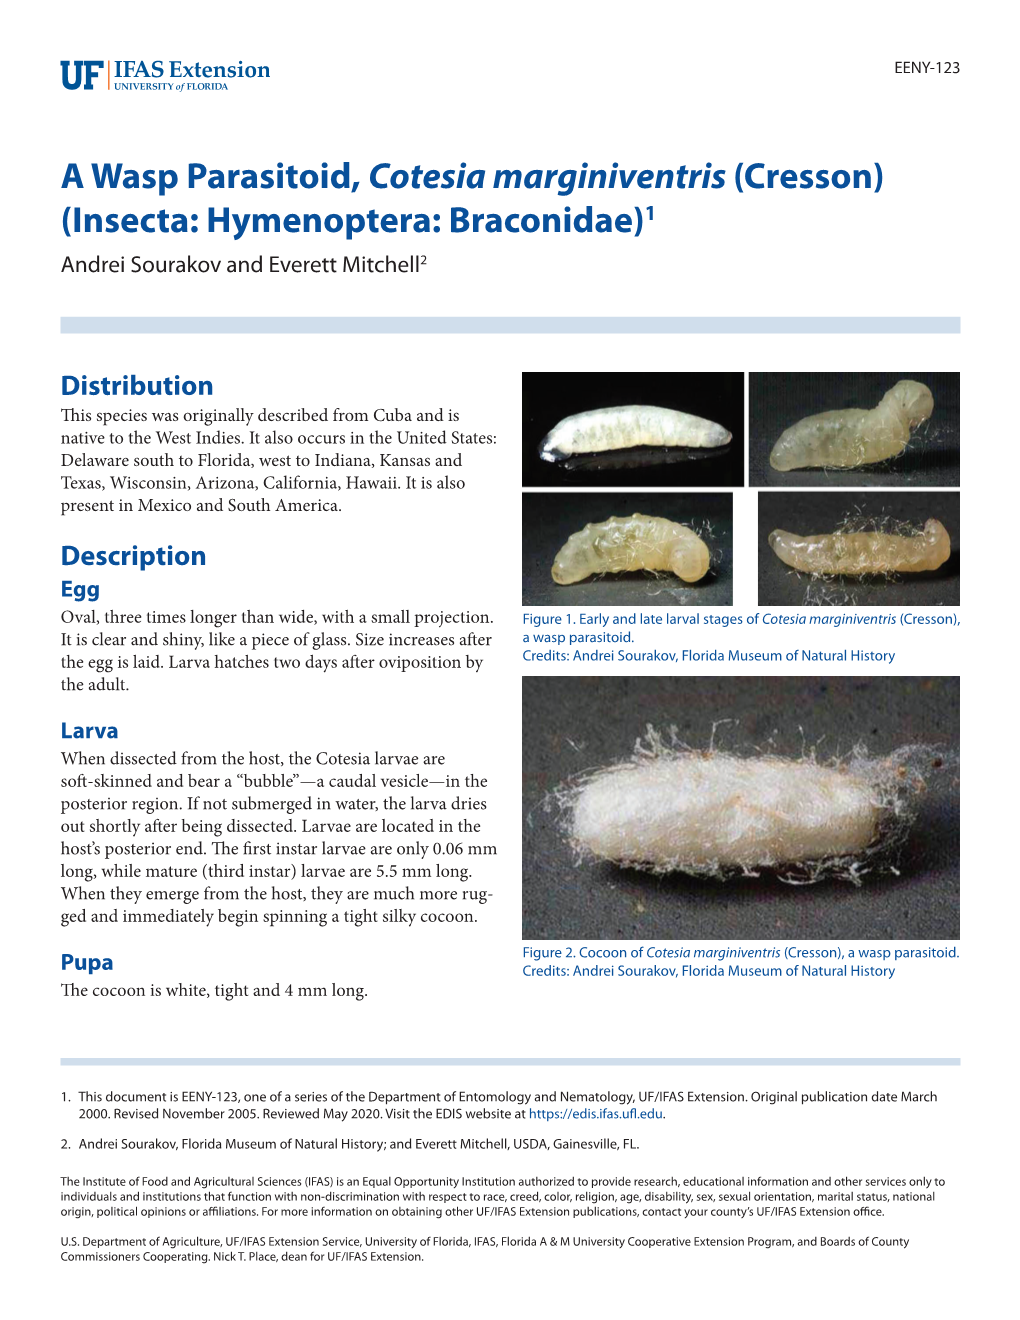 A Wasp Parasitoid, Cotesia Marginiventris (Cresson) (Insecta: Hymenoptera: Braconidae)1 Andrei Sourakov and Everett Mitchell2